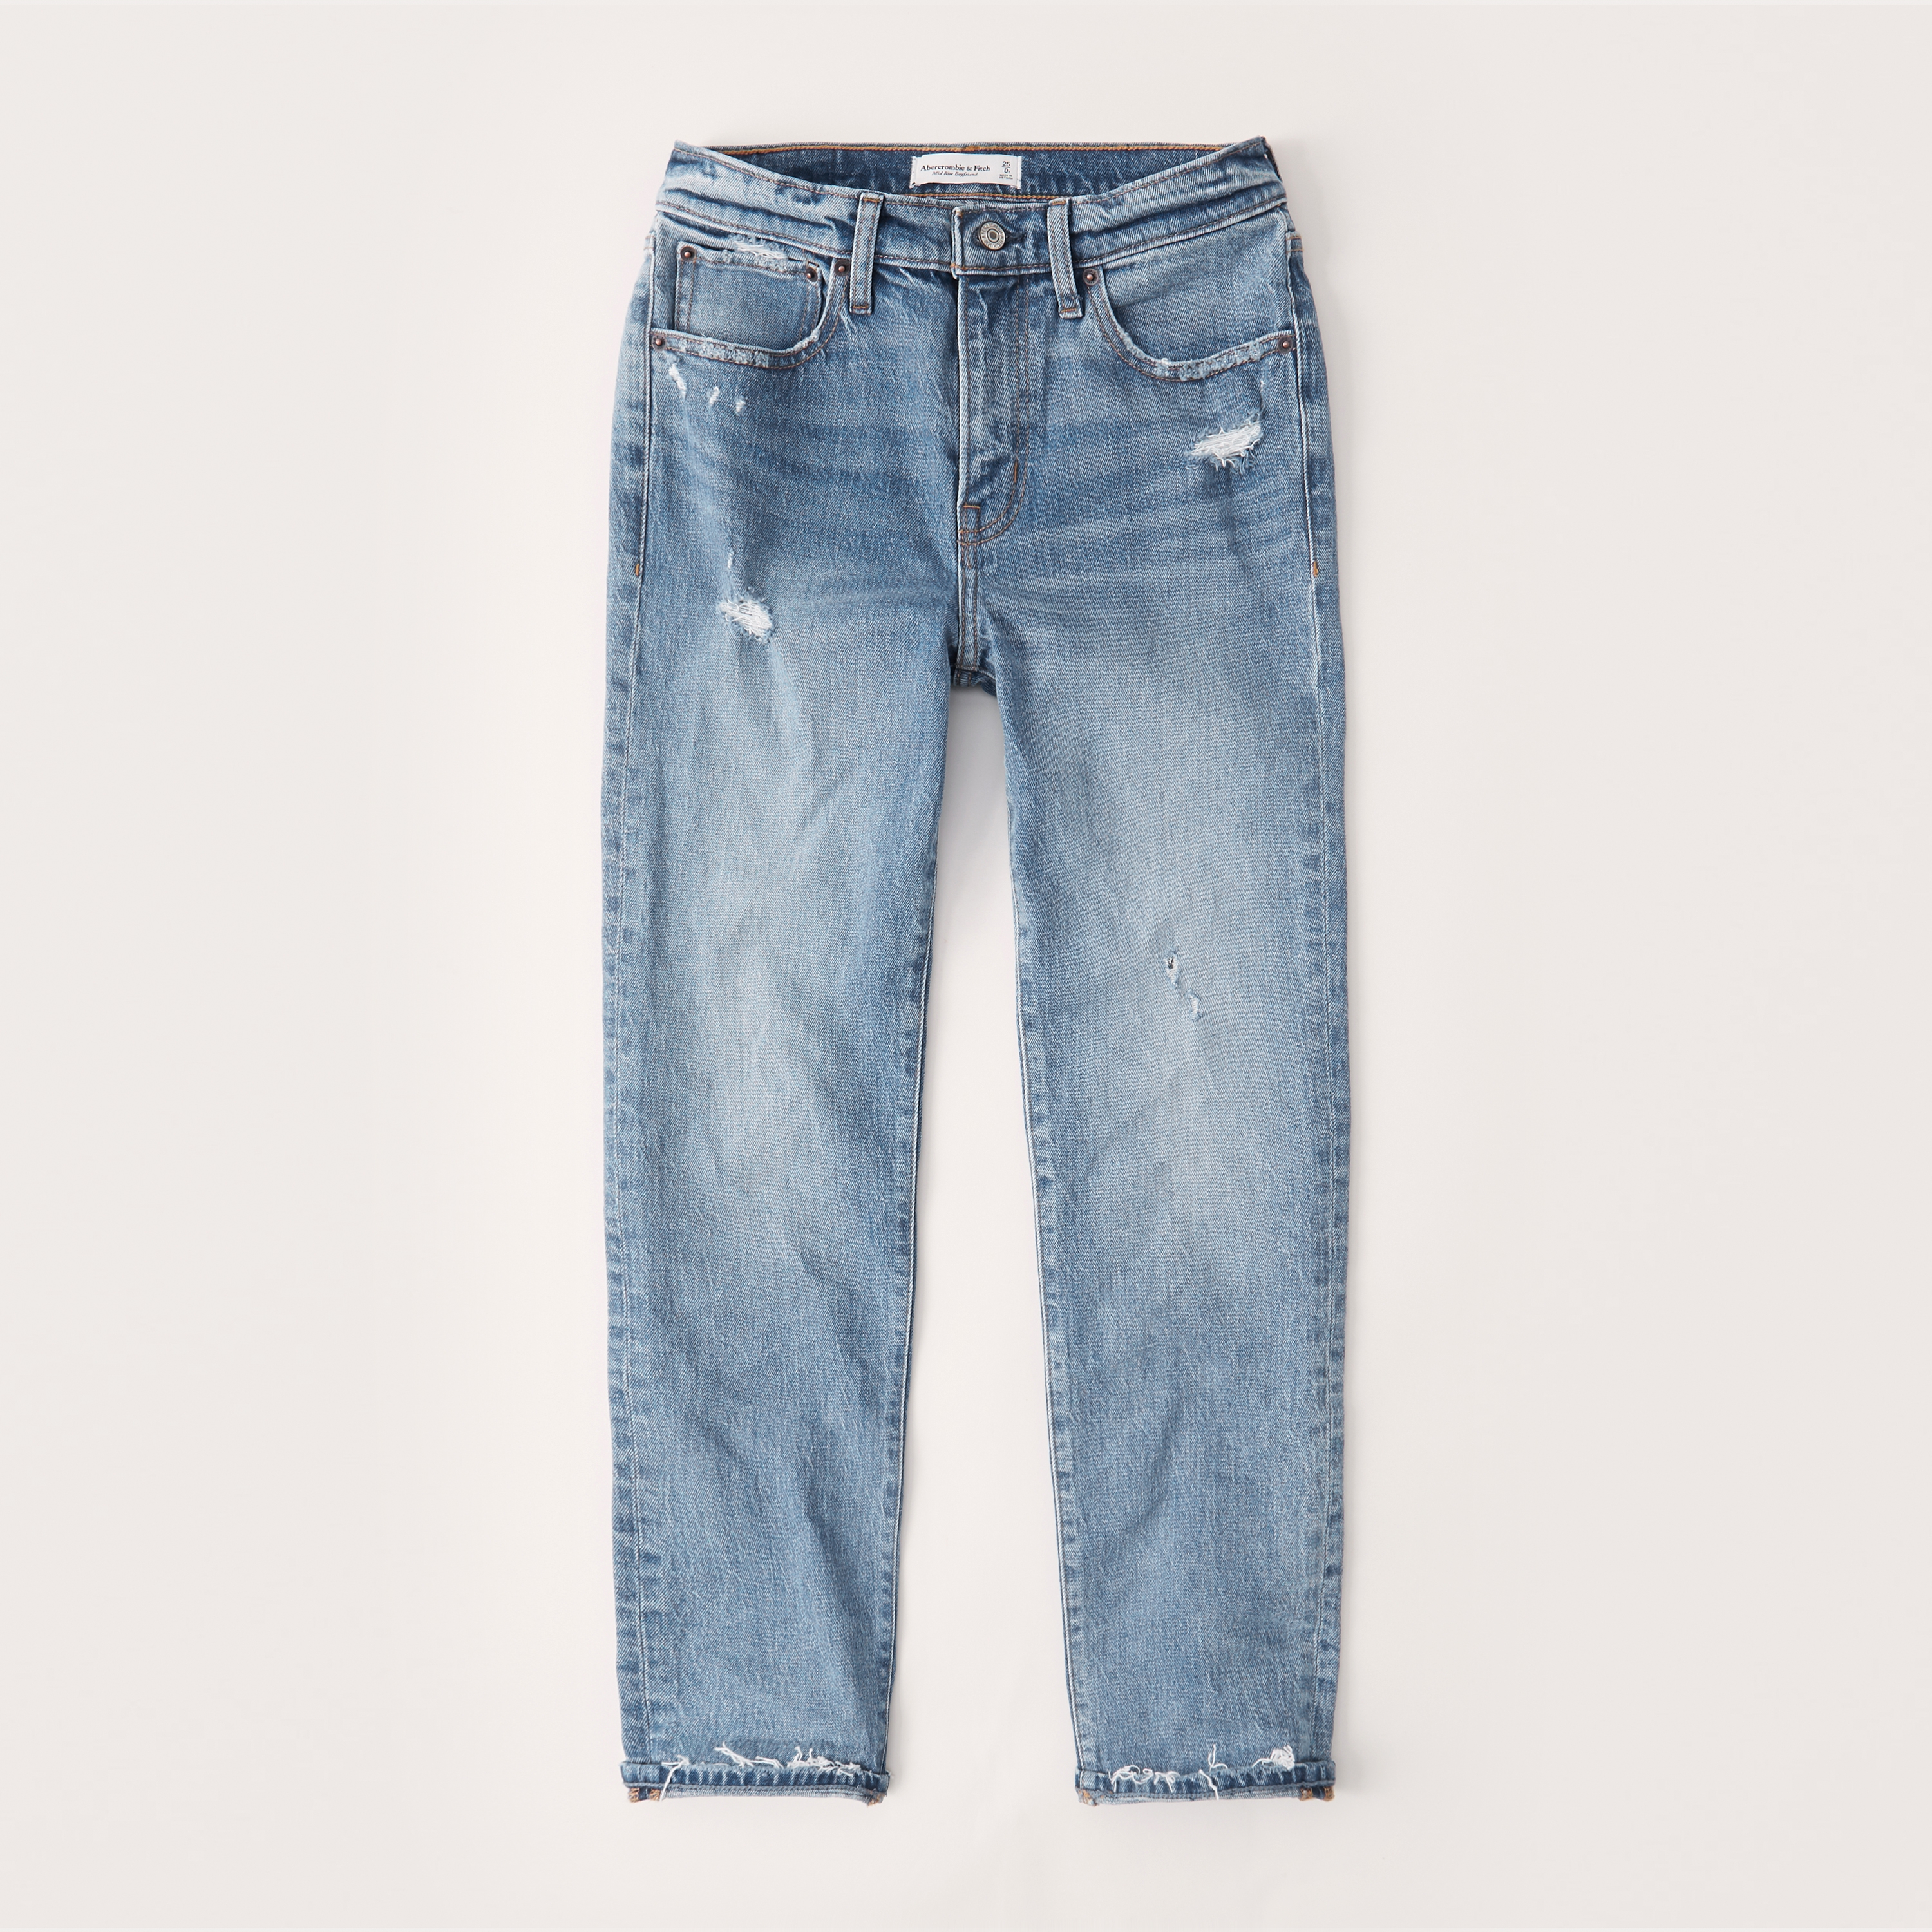 boyfriend jeans for sale